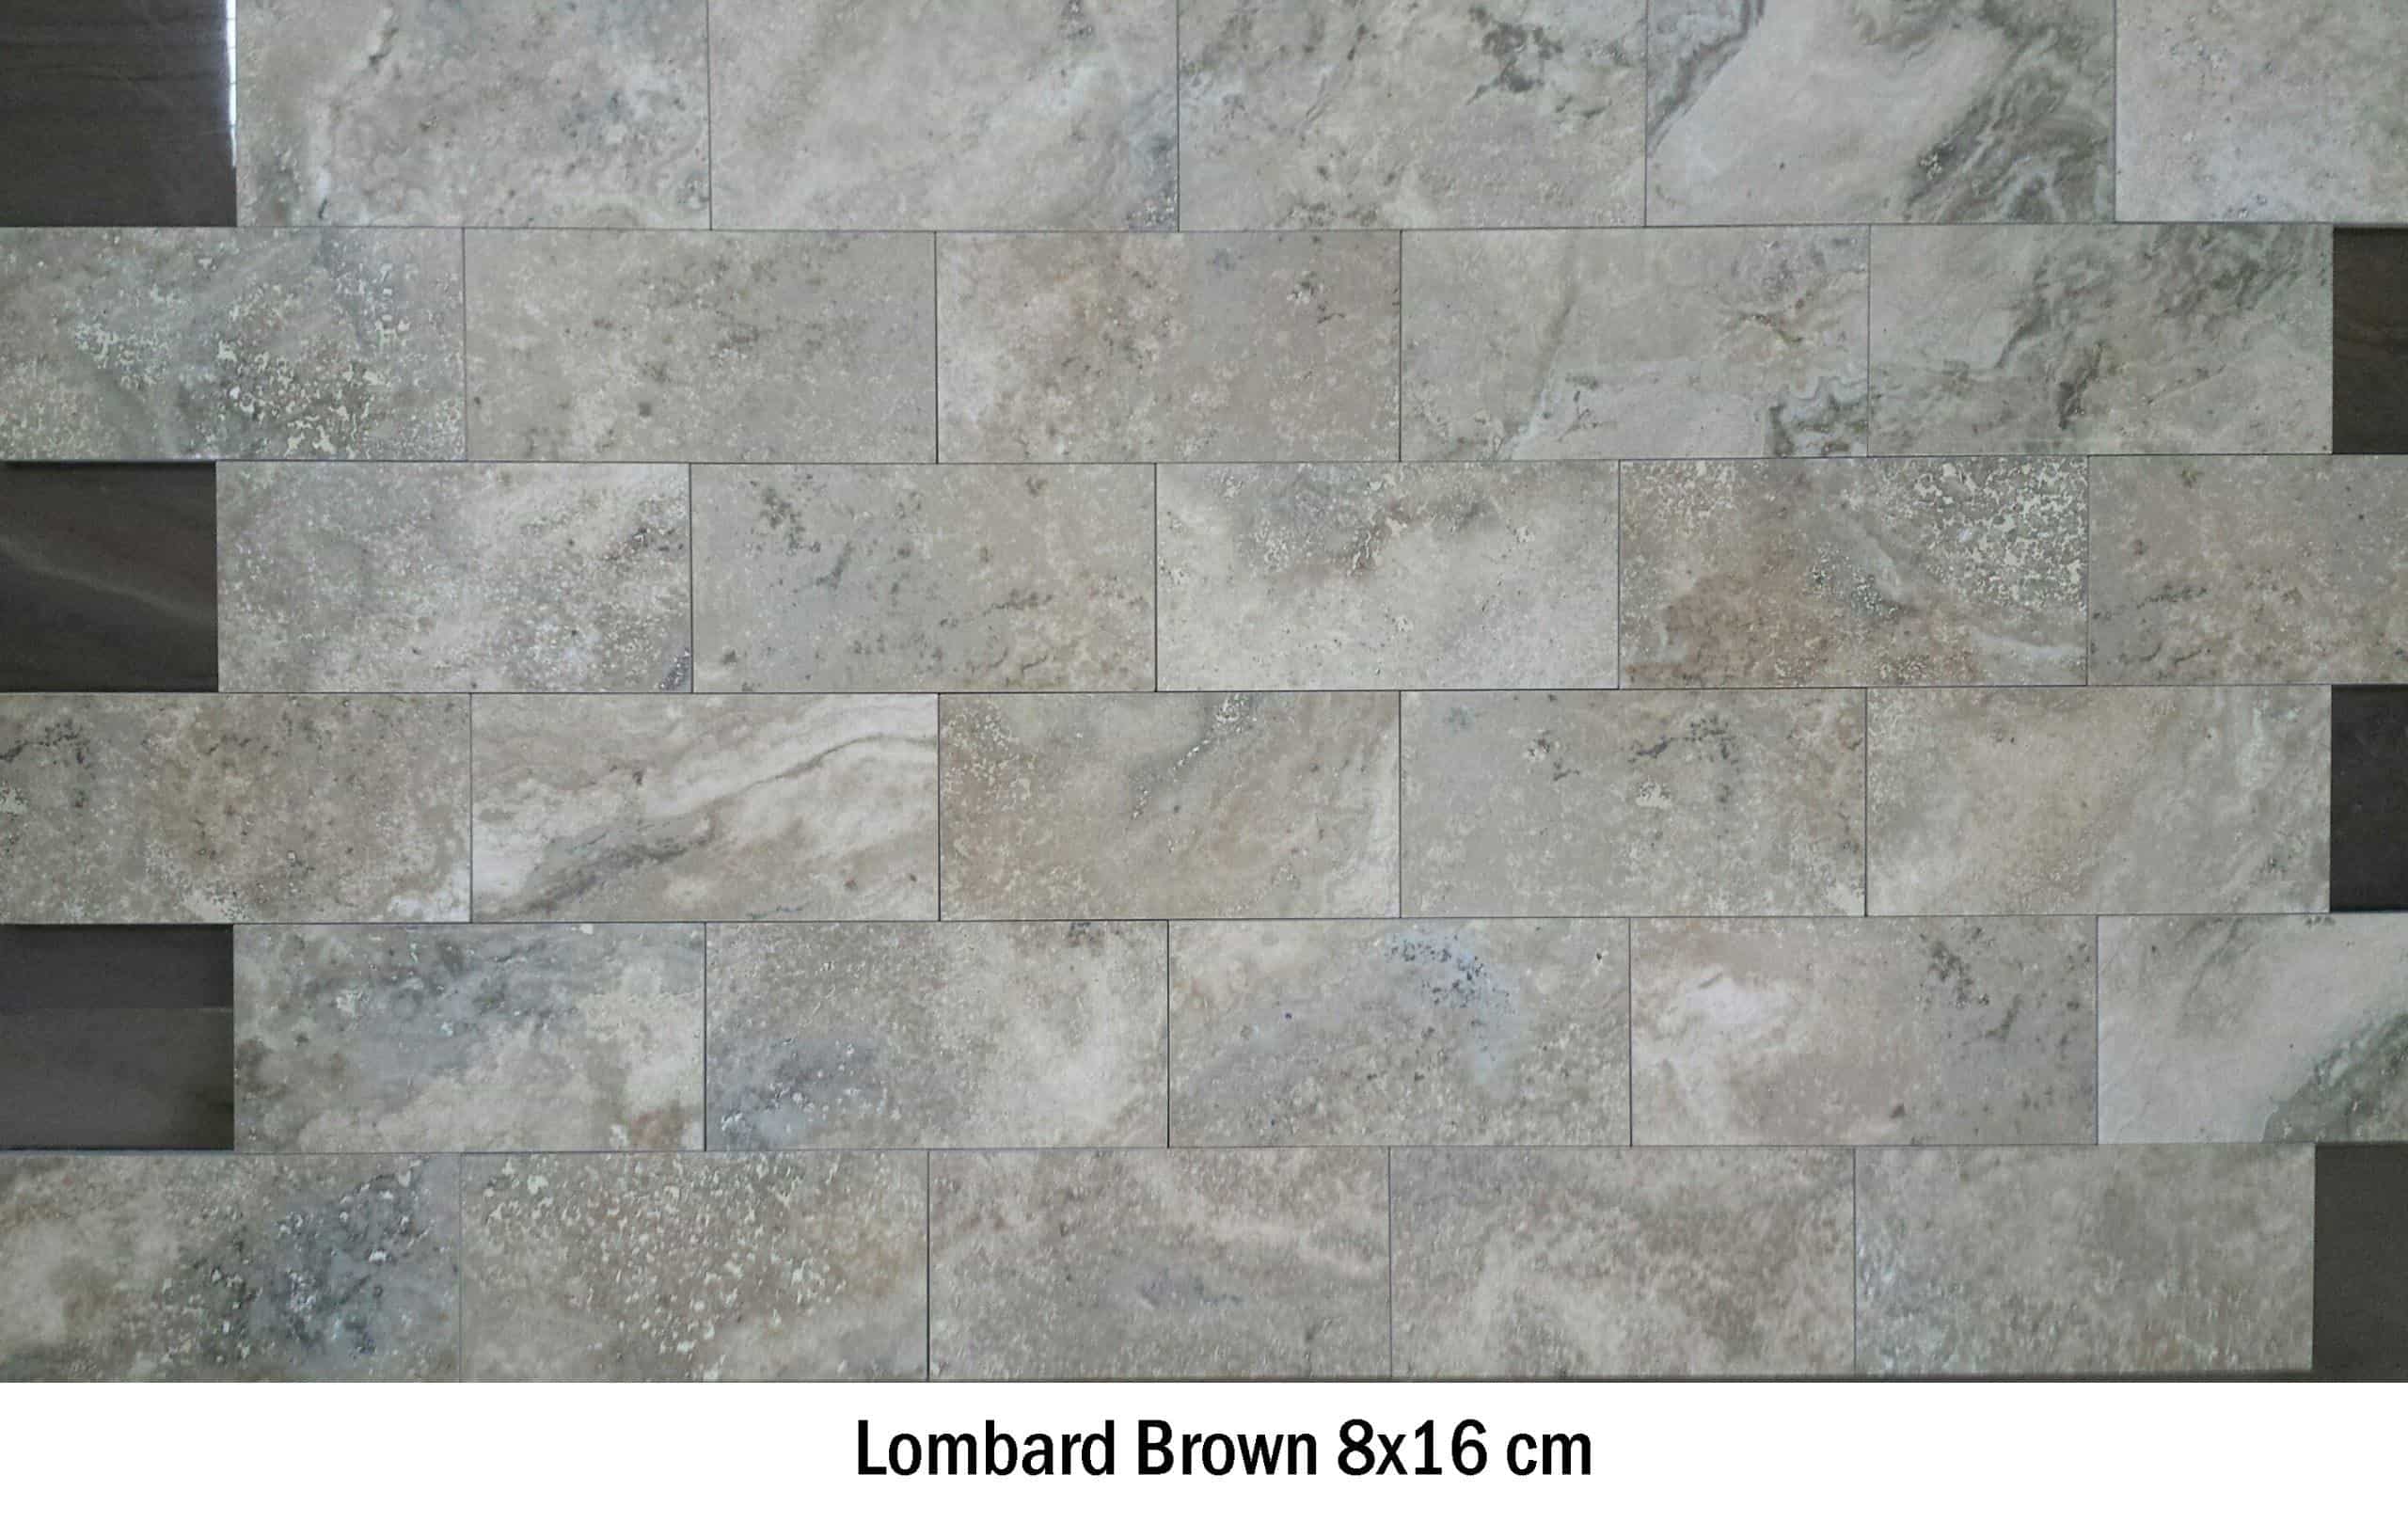 Lombard Brown 8×16 cm